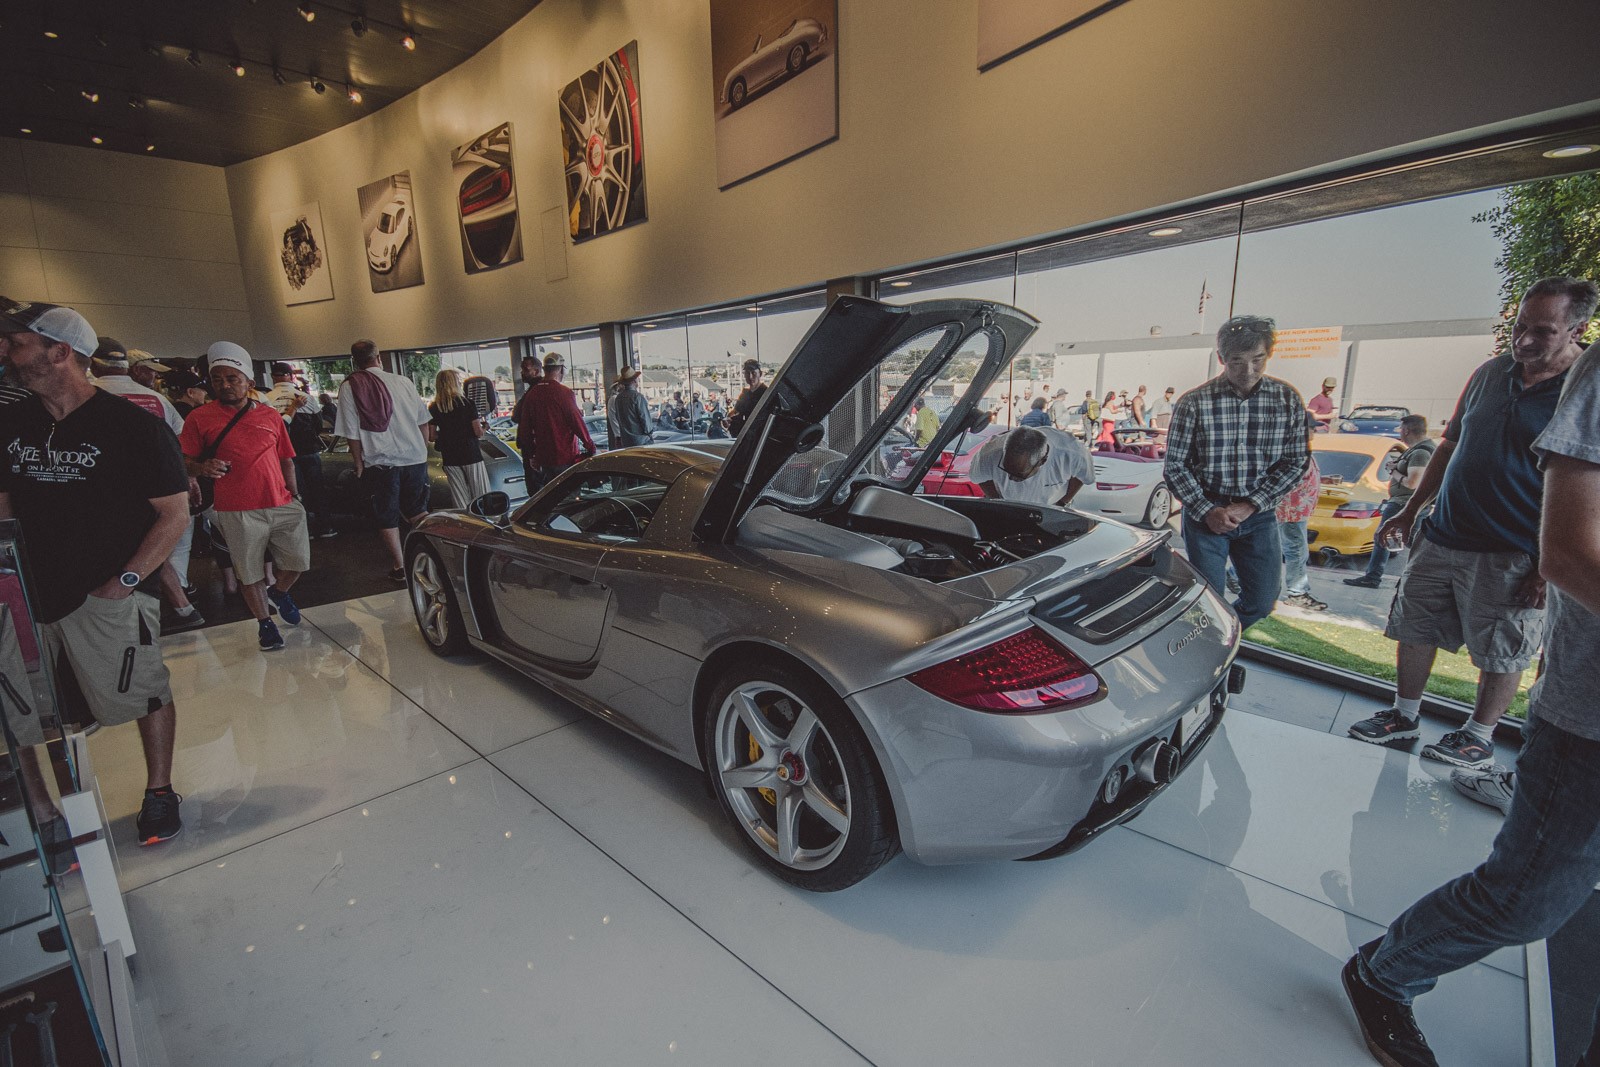 Carrera GT on display in the showroom